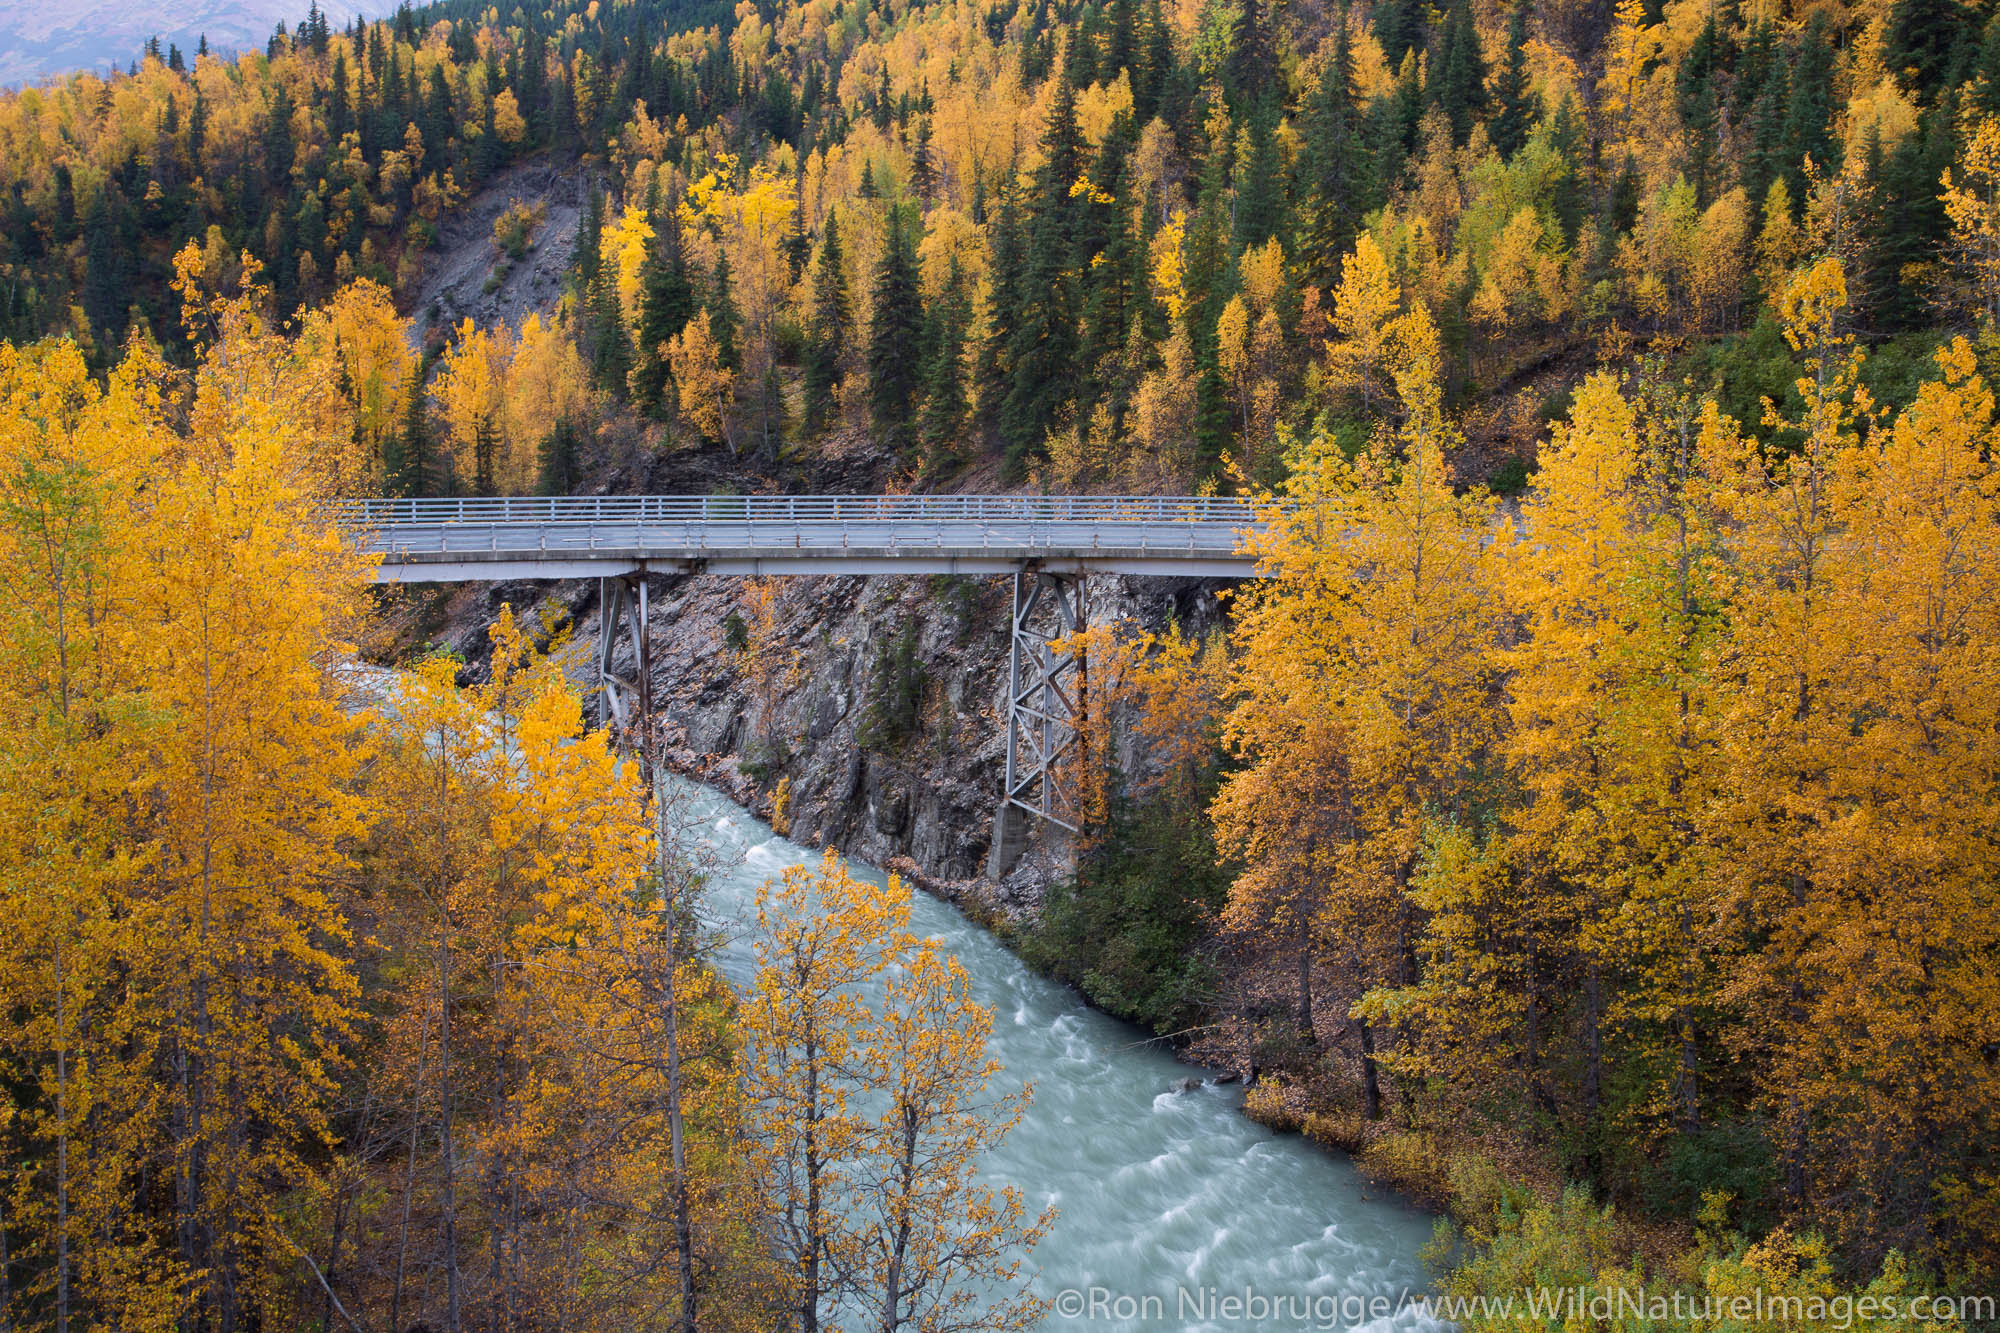 Autumn colors at Canyon Creek, Chugach National Forest, Alaska.